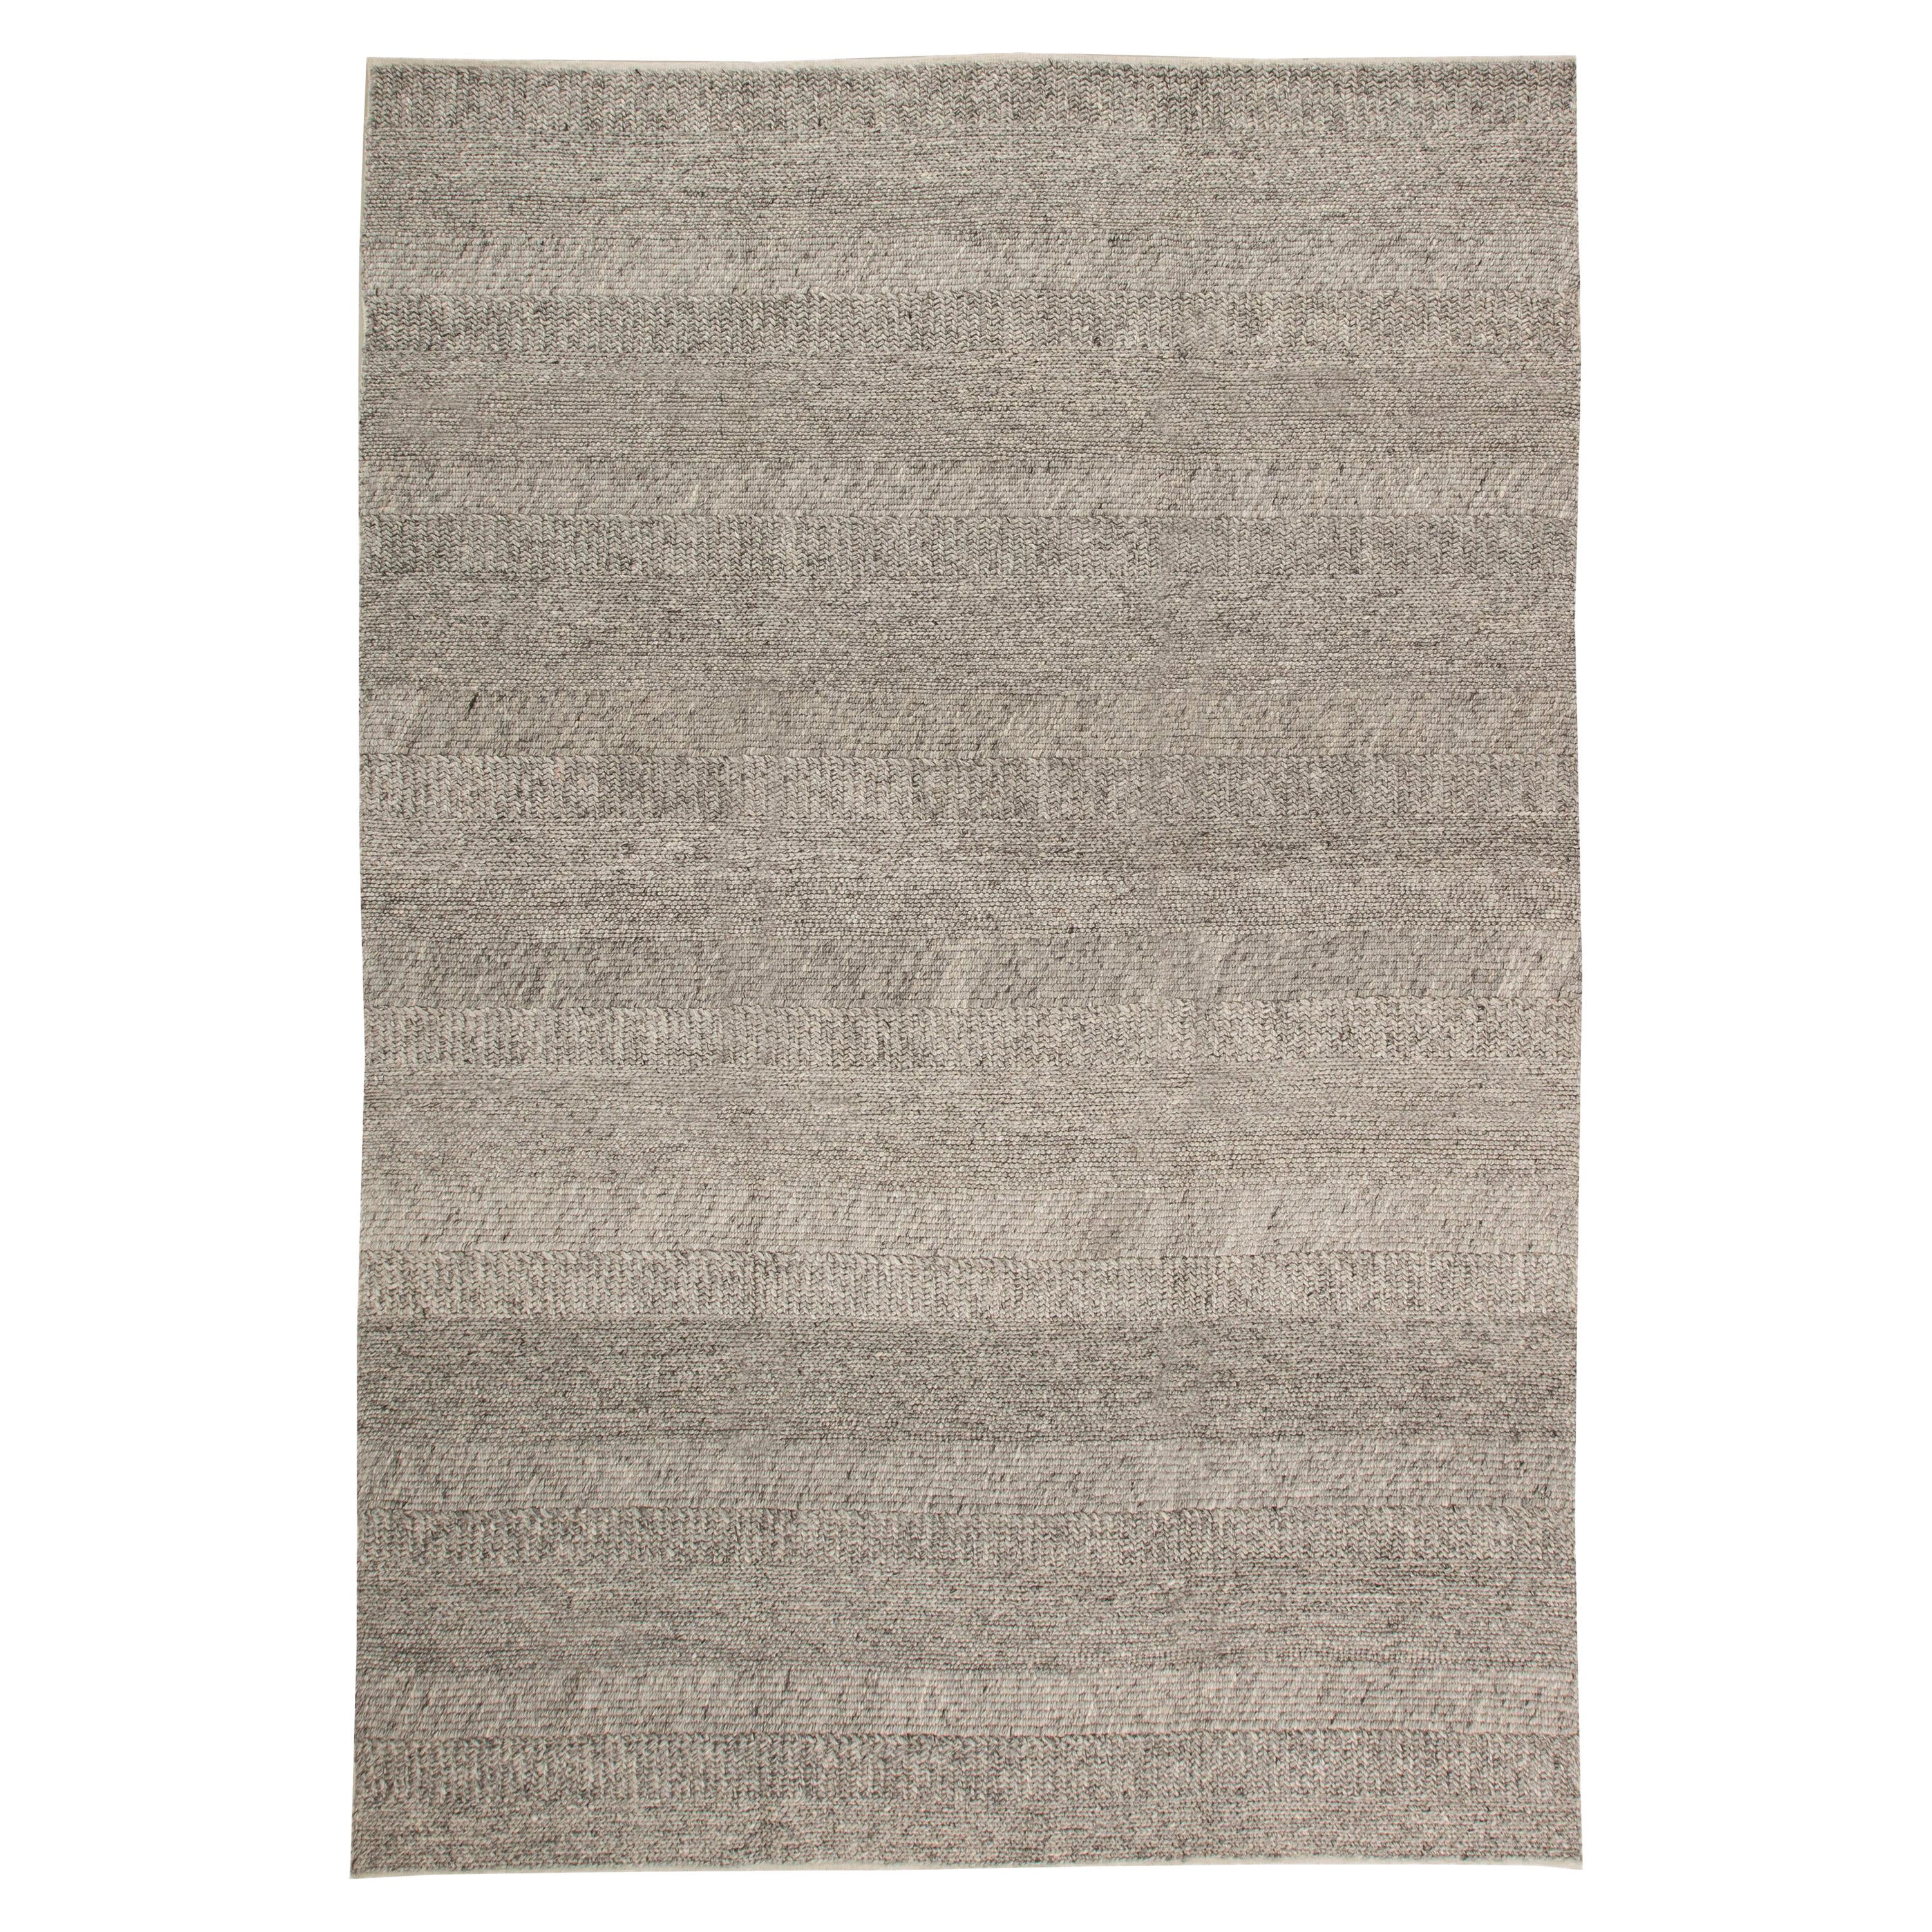 Contemporary Heathered Stone Flat-Weave Wool Rug by Doris Leslie Blau